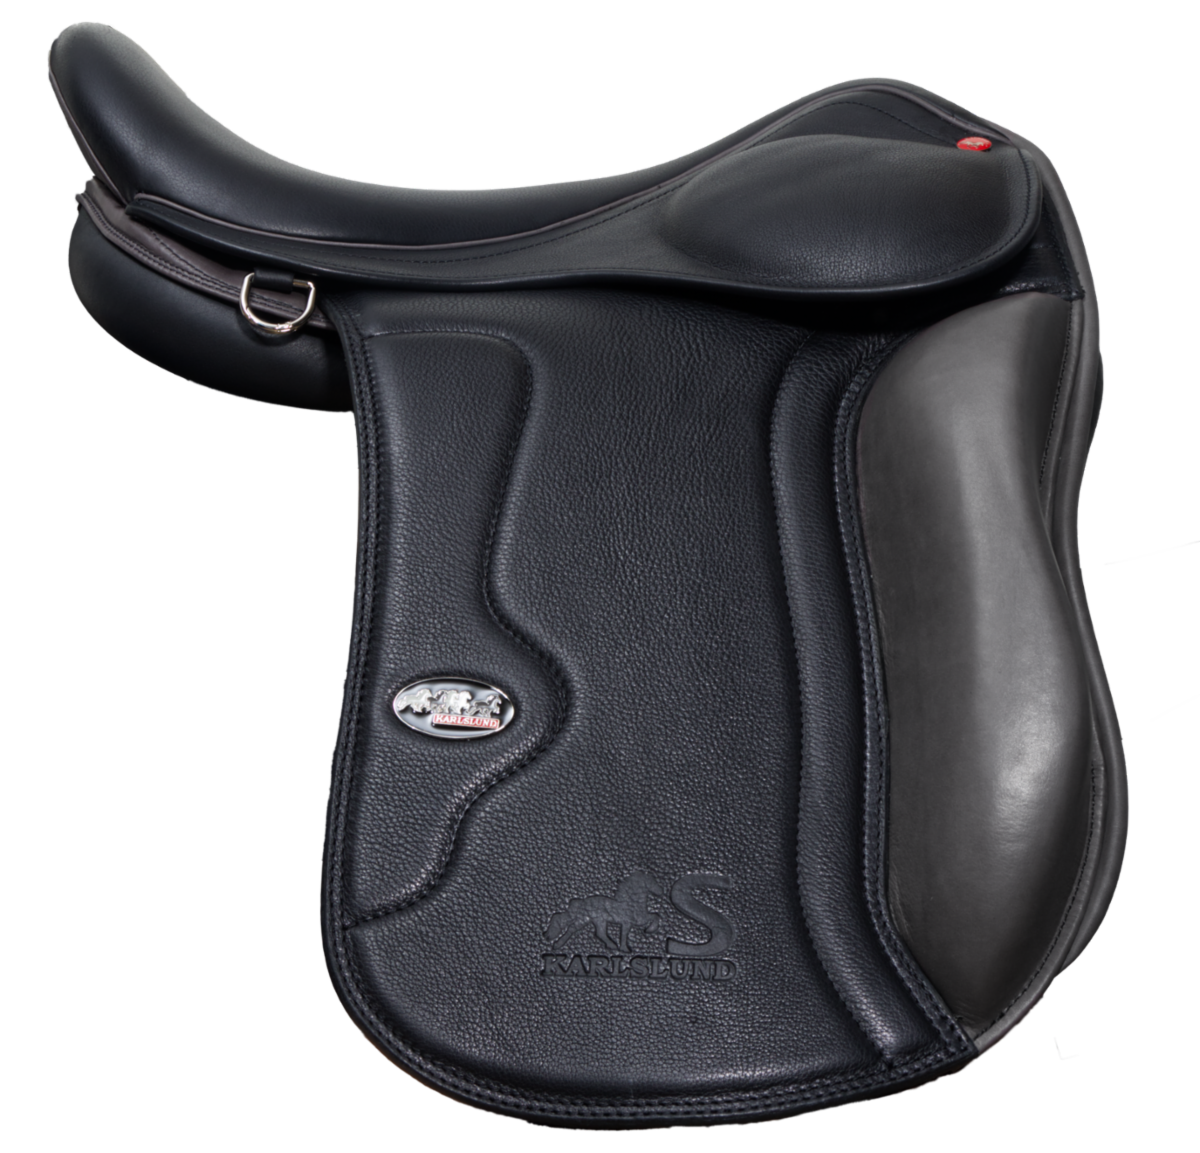 S saddle with long kneeblocks